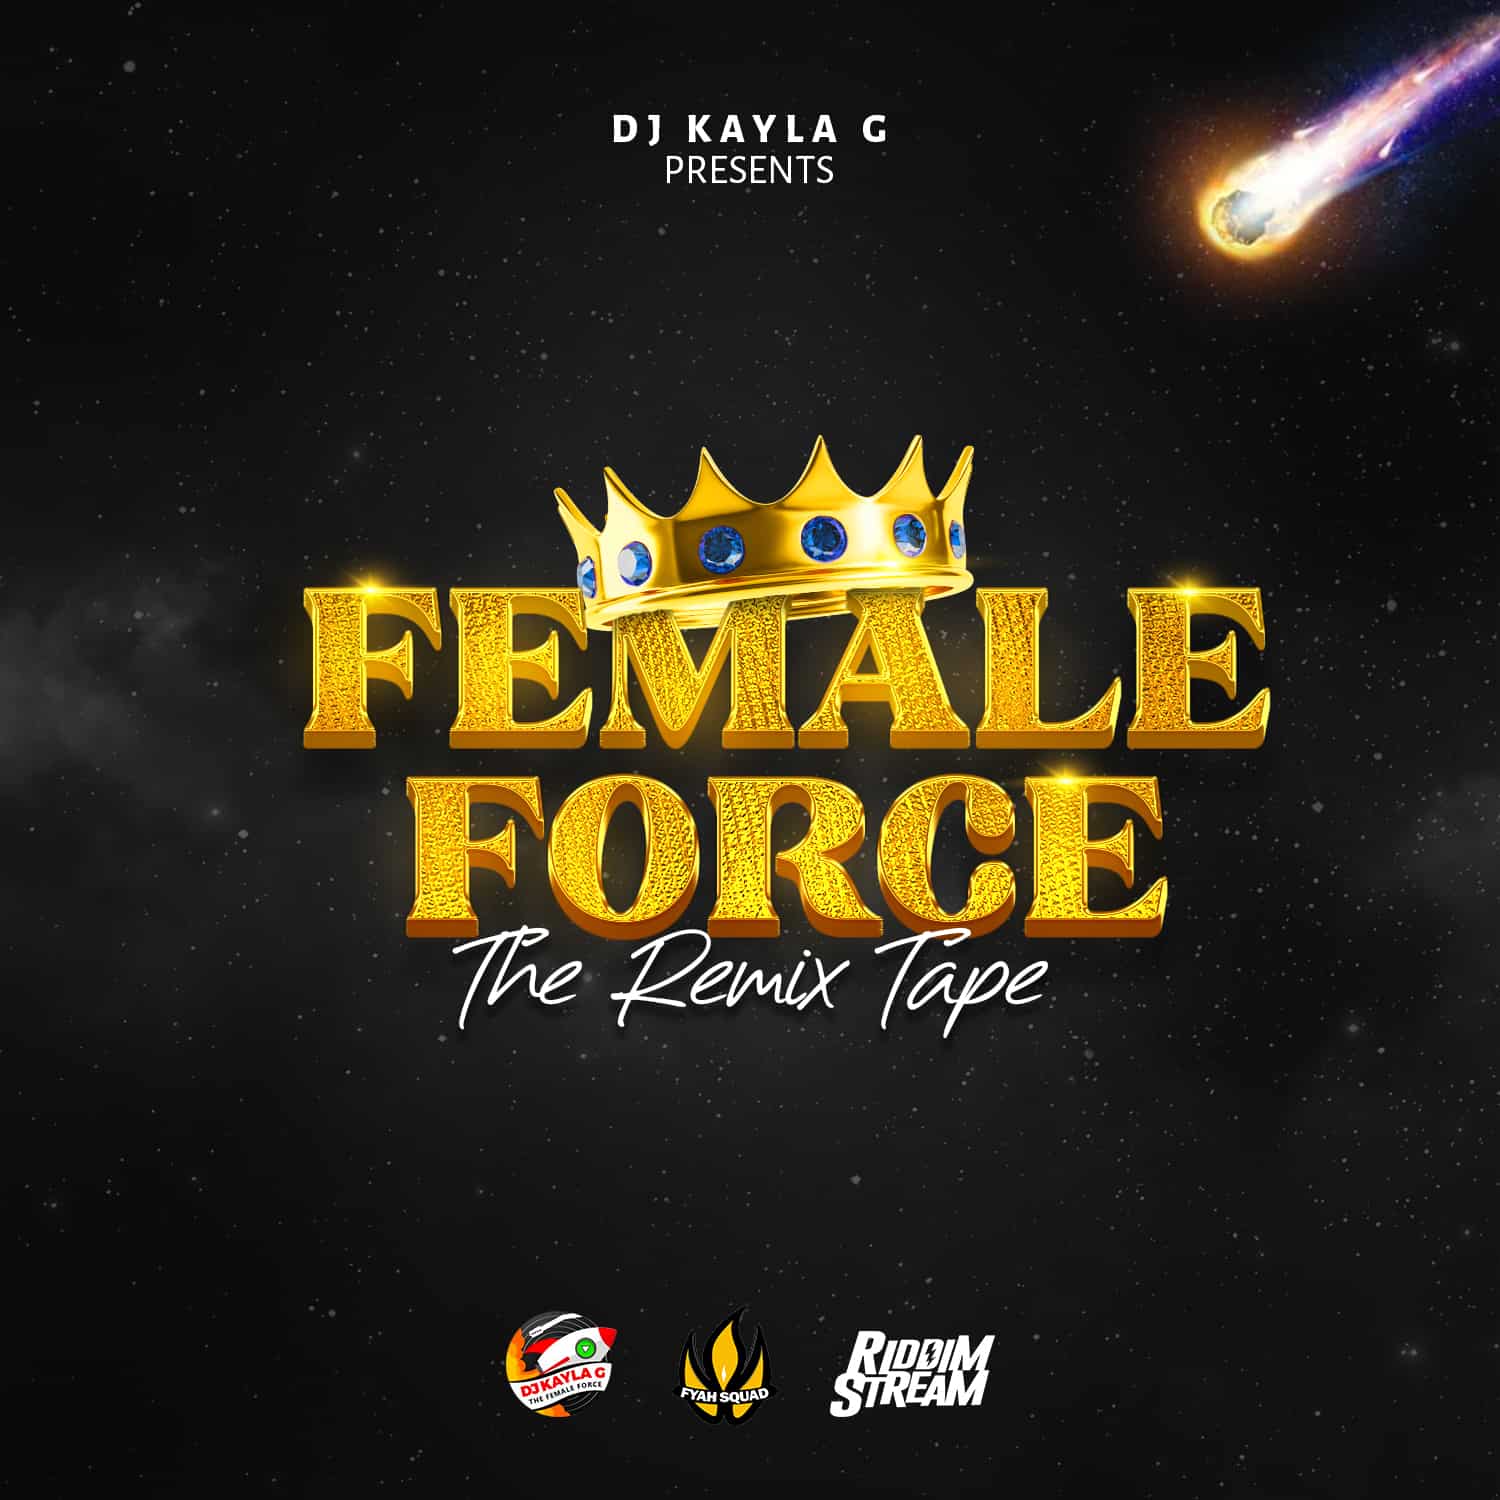 DJ Kayla G - FEMALE FORCE: The Remix Tape (2021 Mixtape)